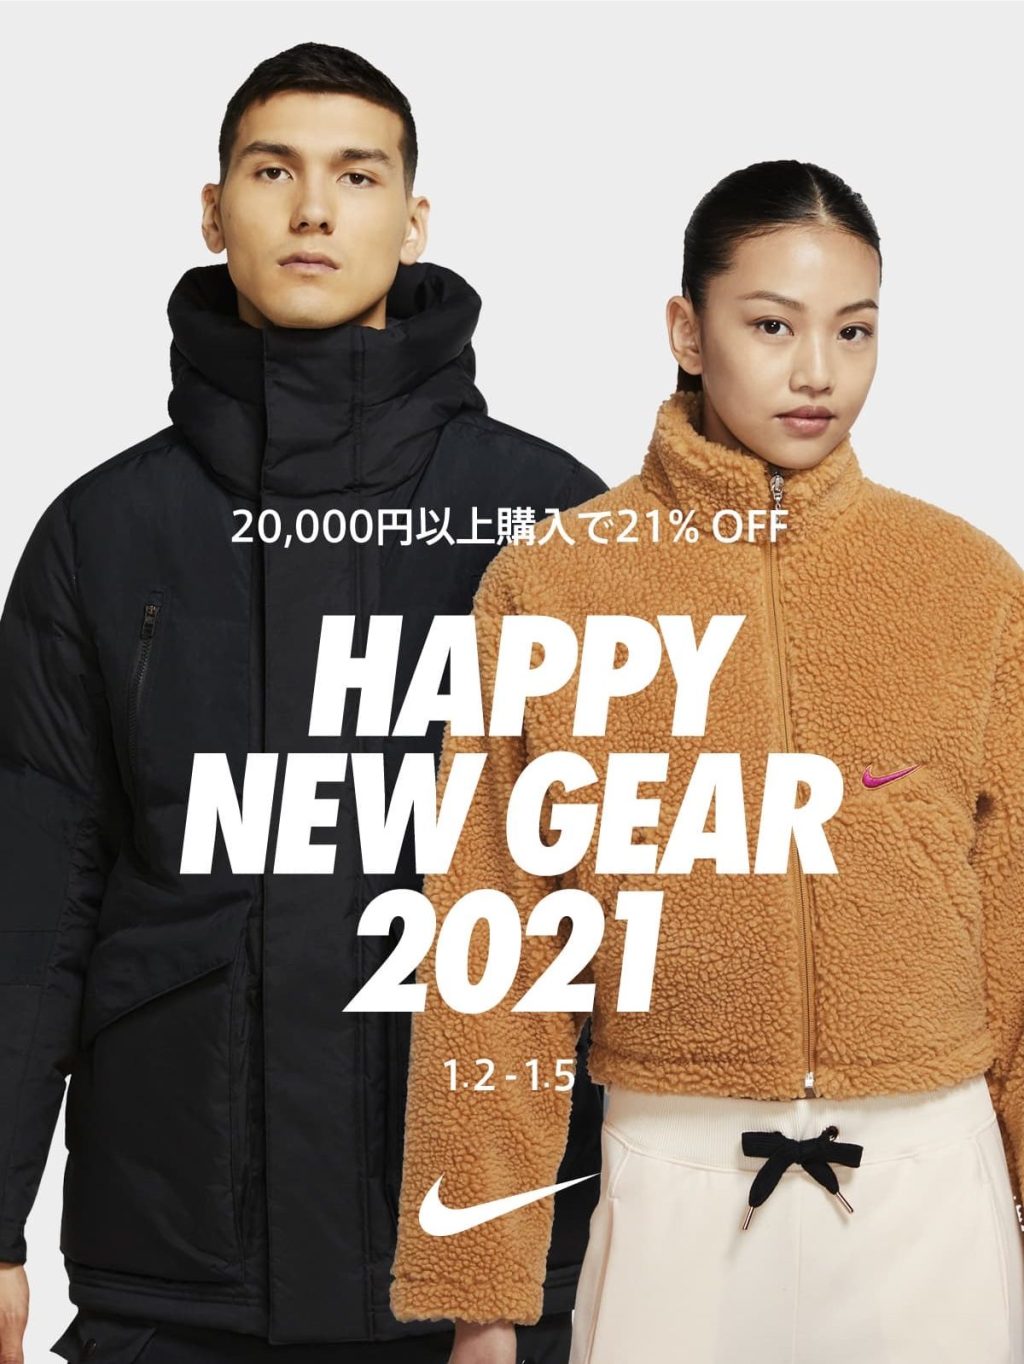 nike-happy-new-year-sale-21-percent-off-start-20210102